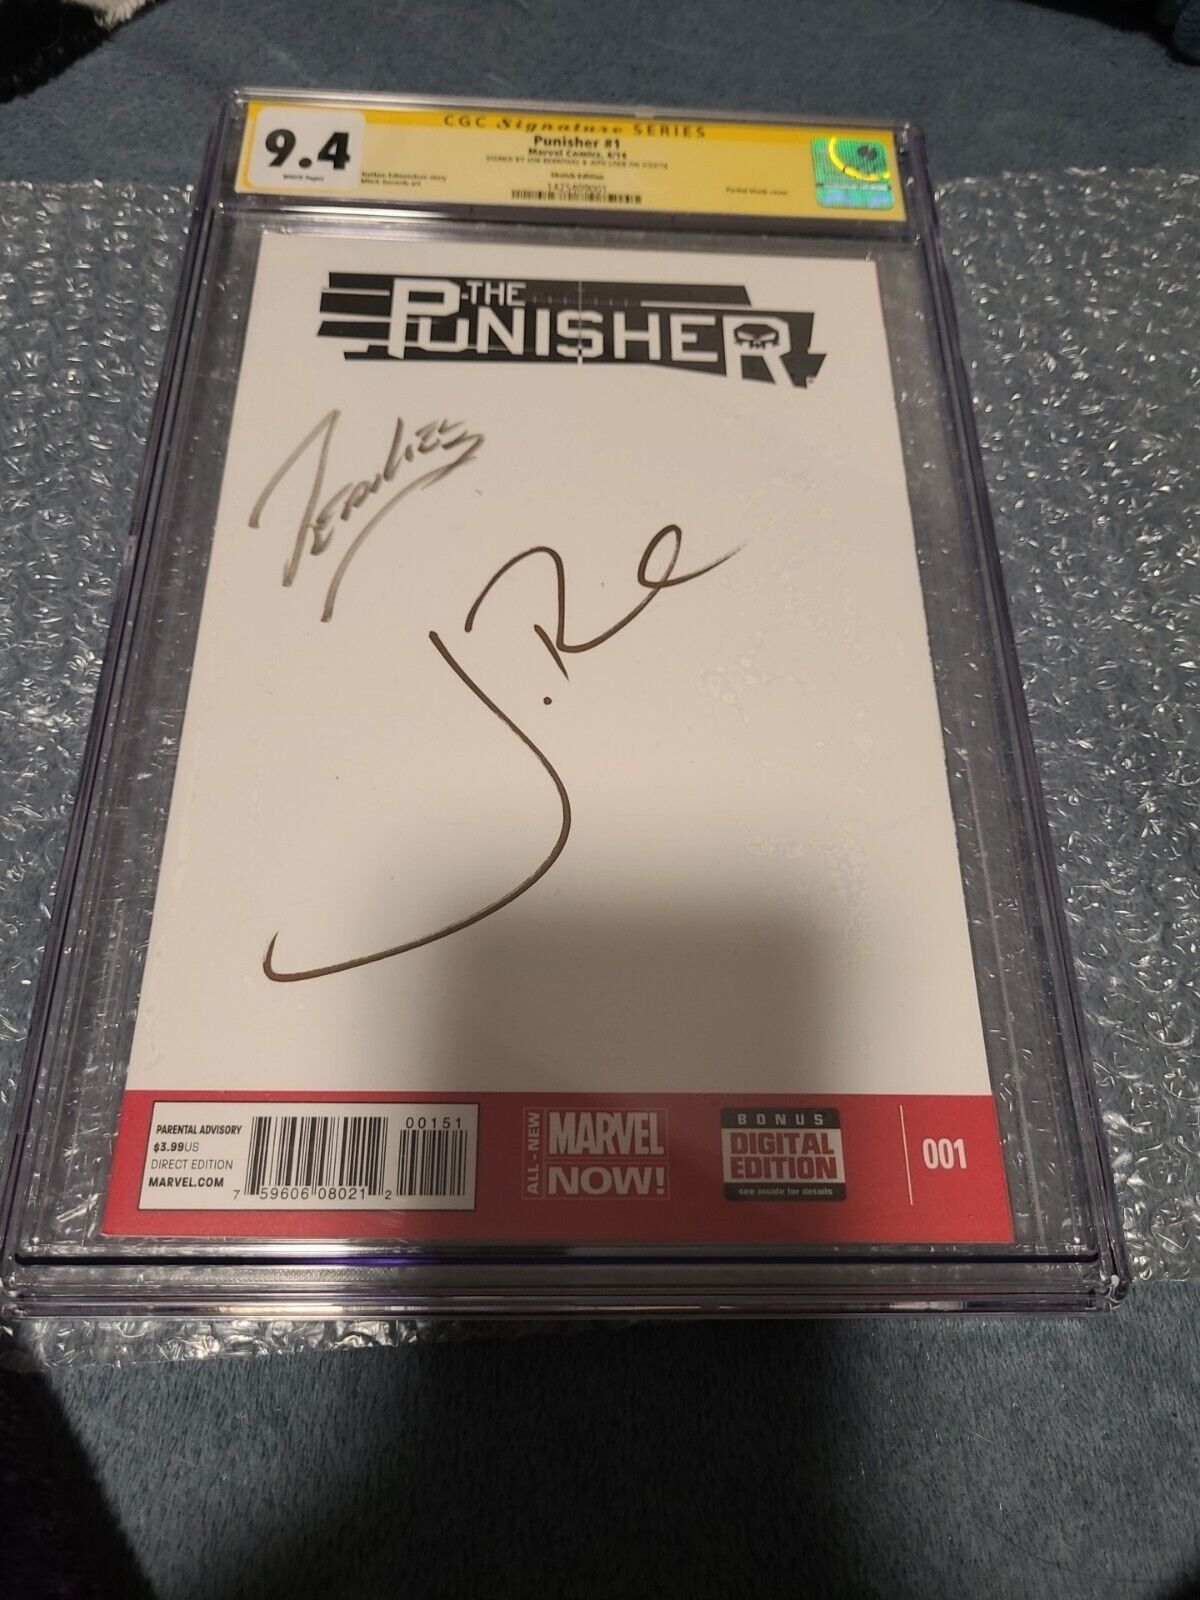 Punisher #1 Sketch editon CGC SS 9.4 Signed by Jon Bernthal, & Jeph Loeb